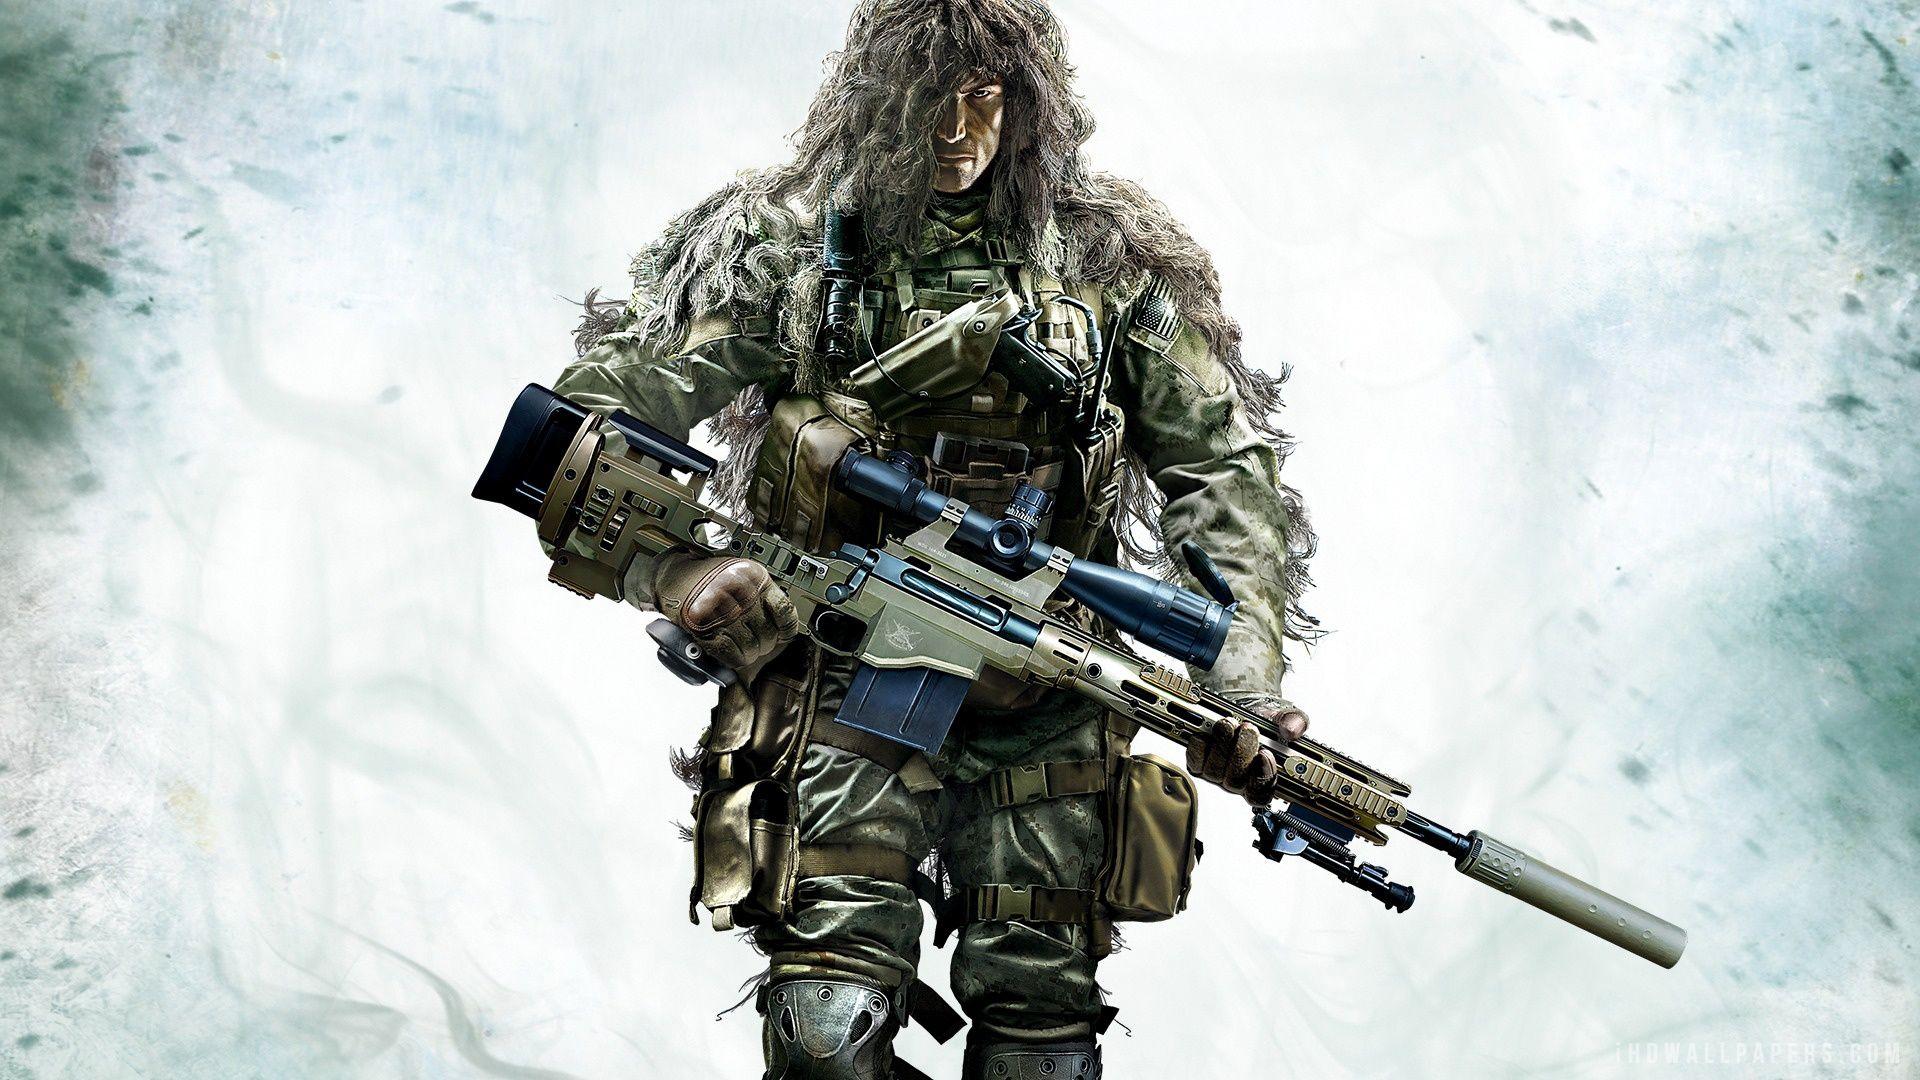 Sniper Ghost Warrior Wallpaper 1080p Hd Wallpaper. Sniper Ghost